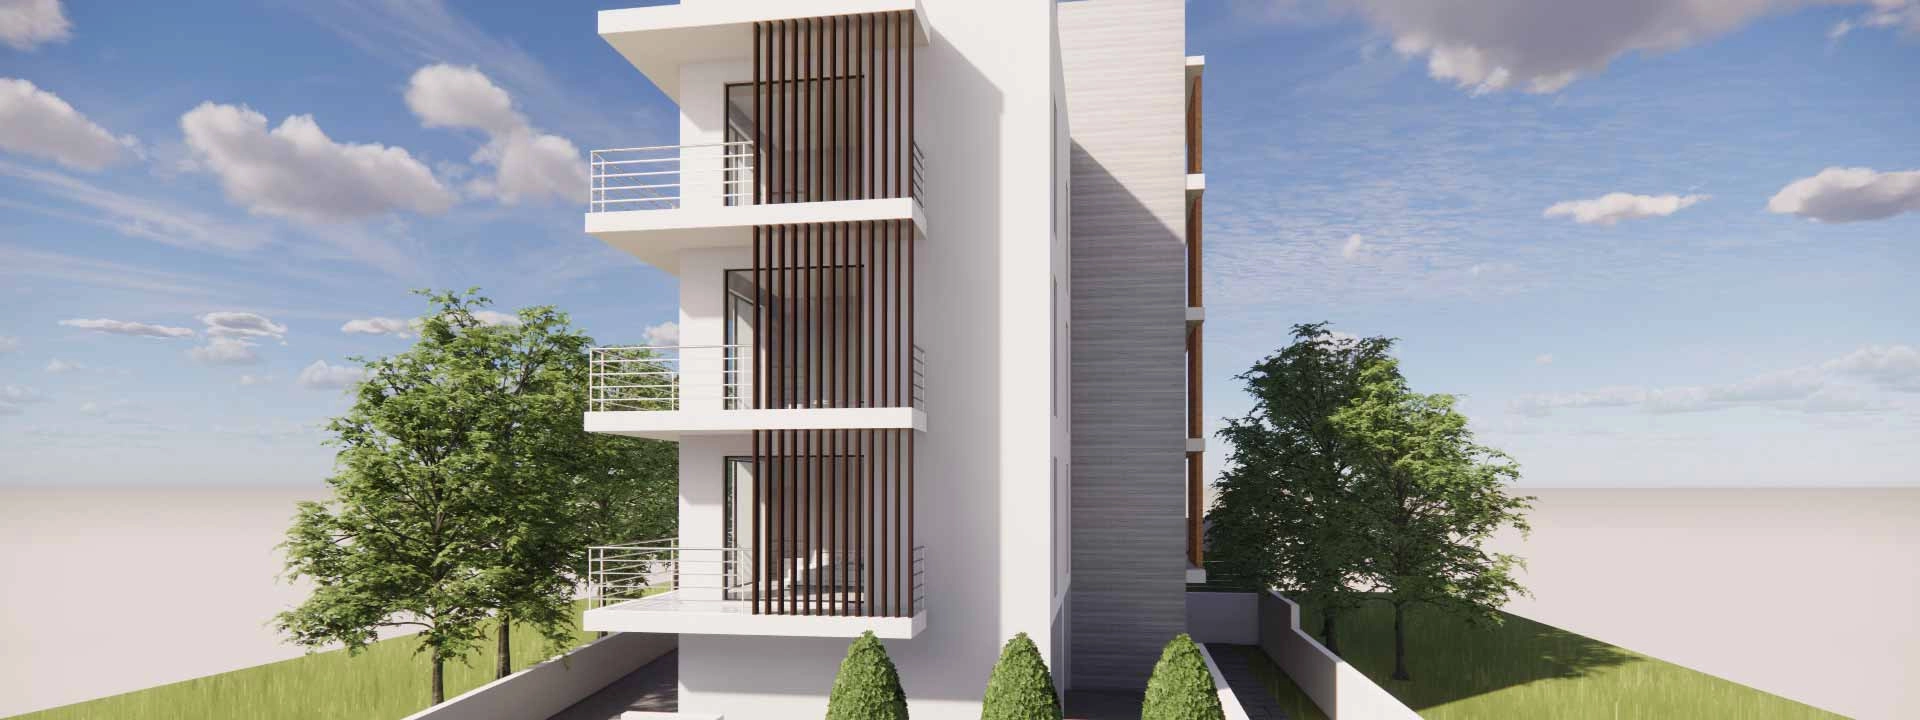 3 Bedroom Apartment for Sale in Paphos – Anavargos